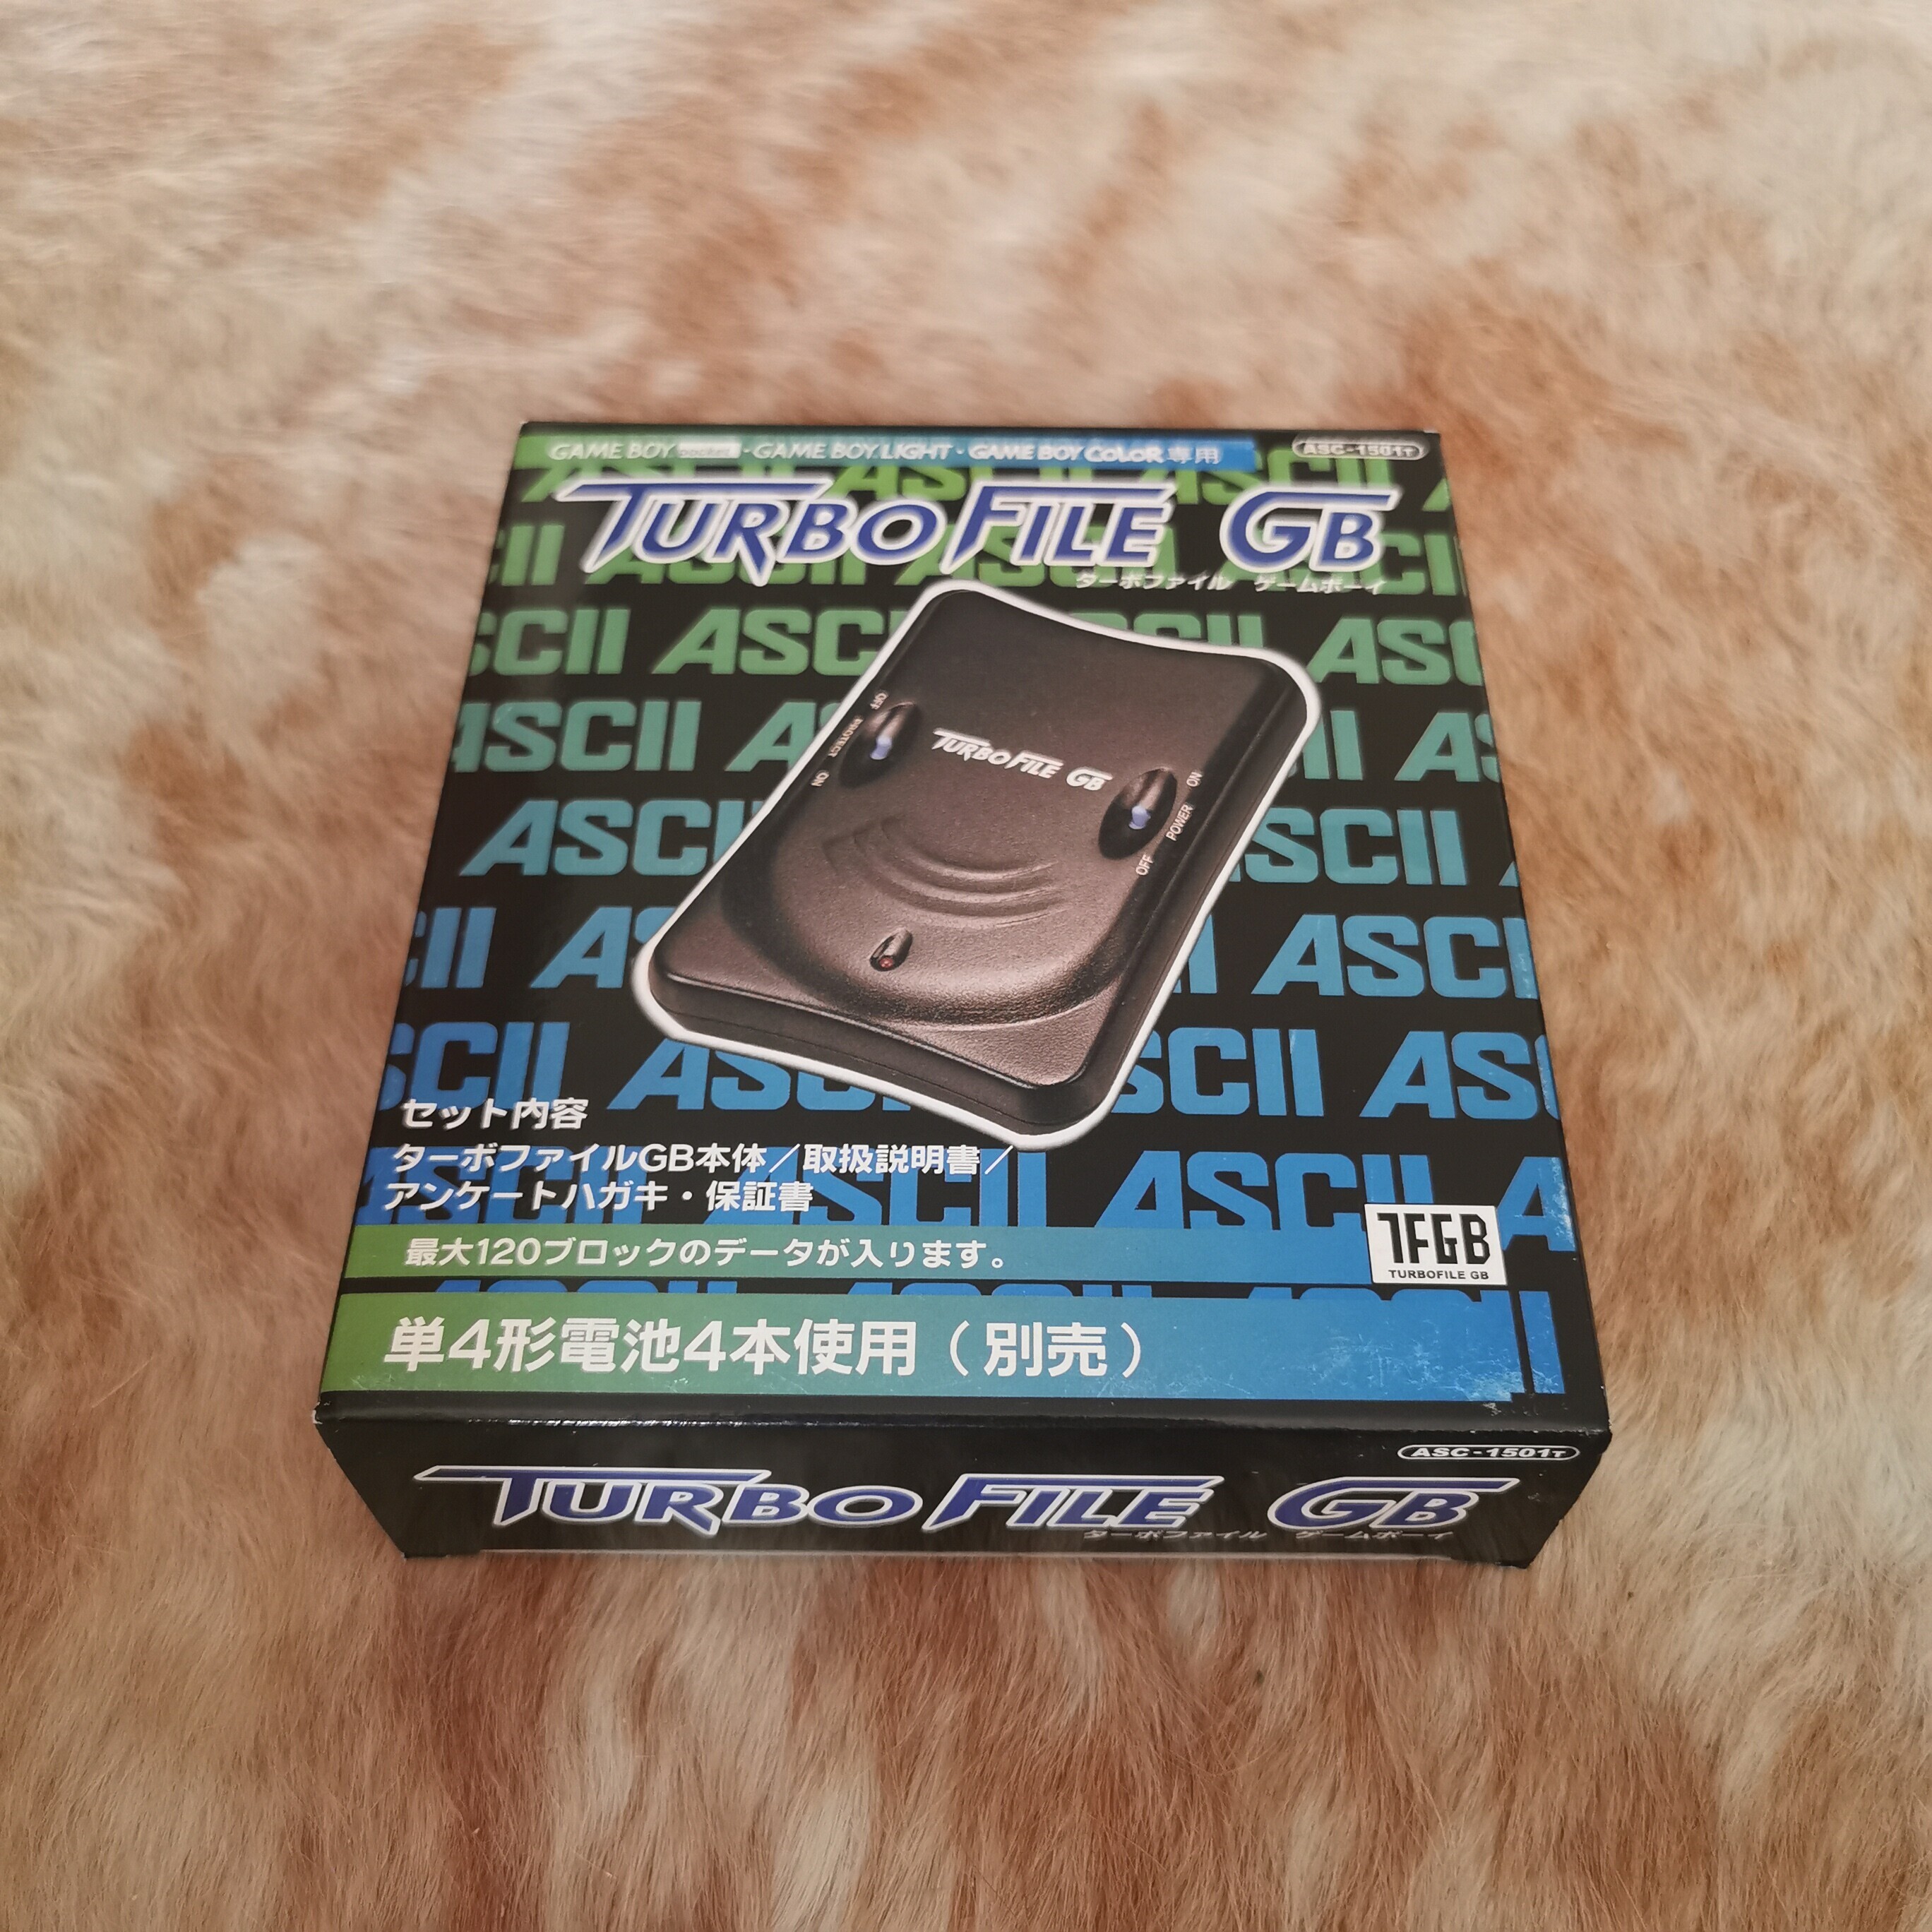  ASCII Game Boy Pocket Turbo File GB